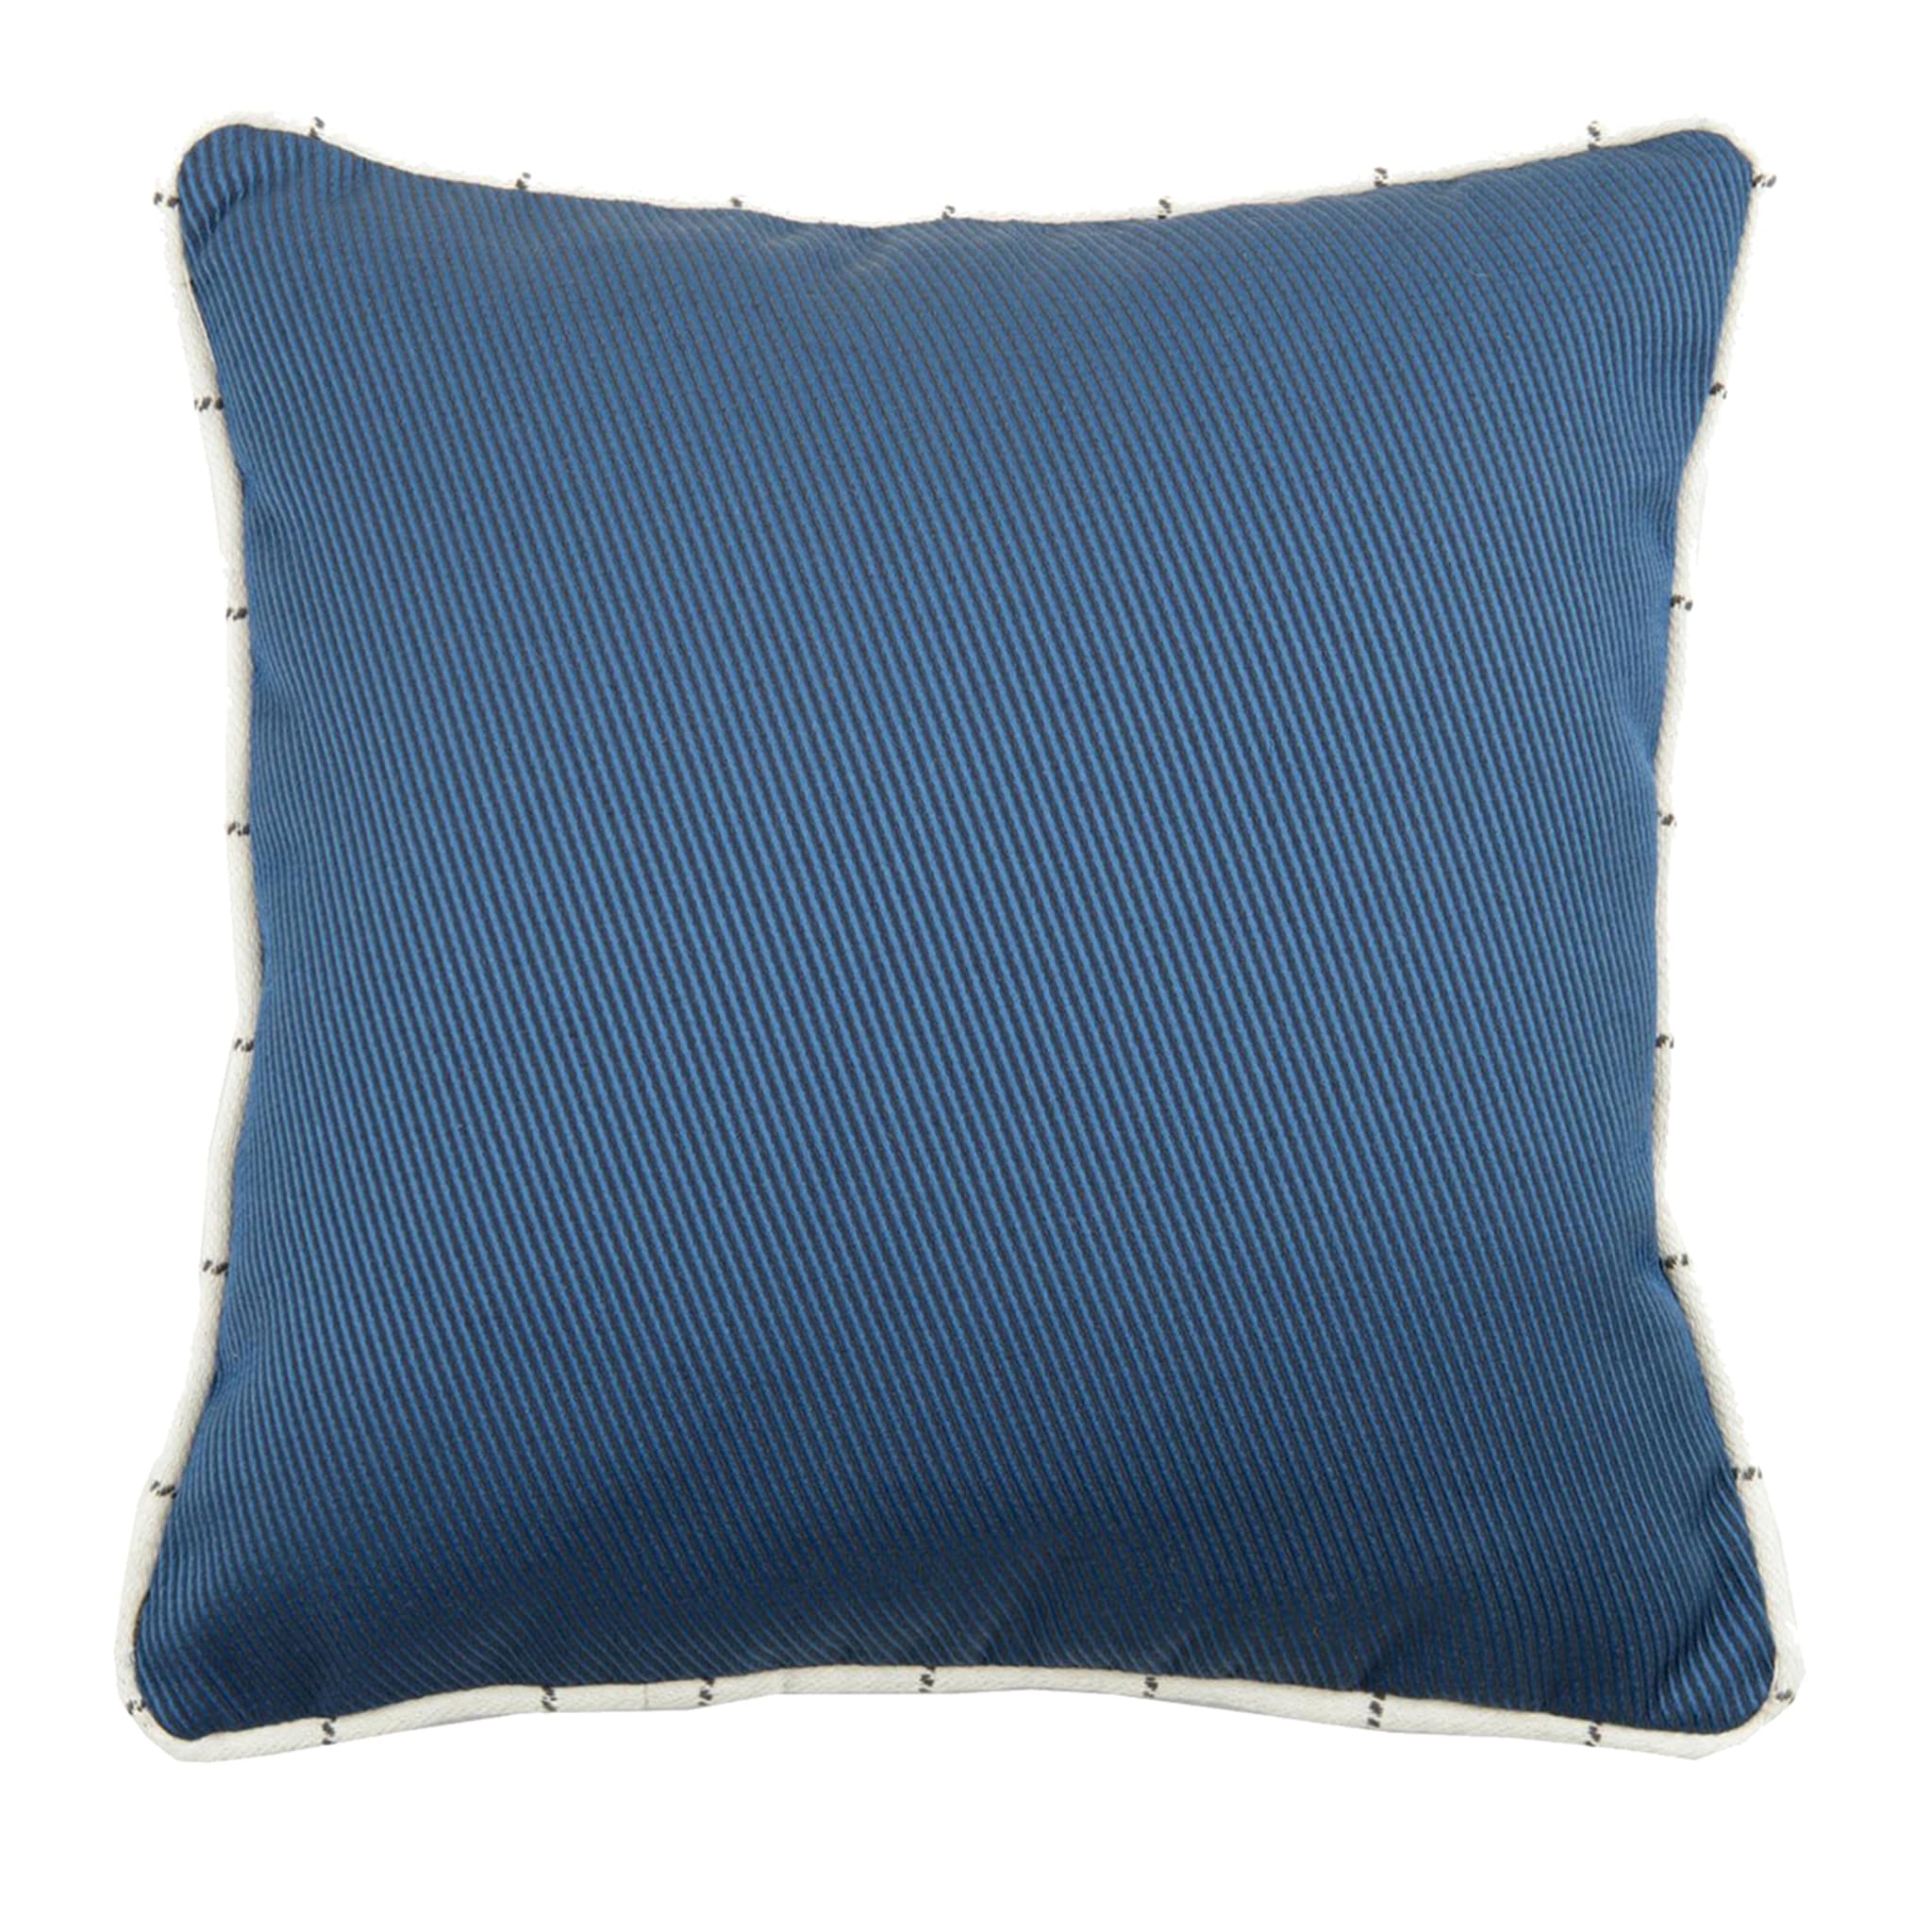 Cuscino Carré blu in tessuto jacquard finto unitario - Vista principale